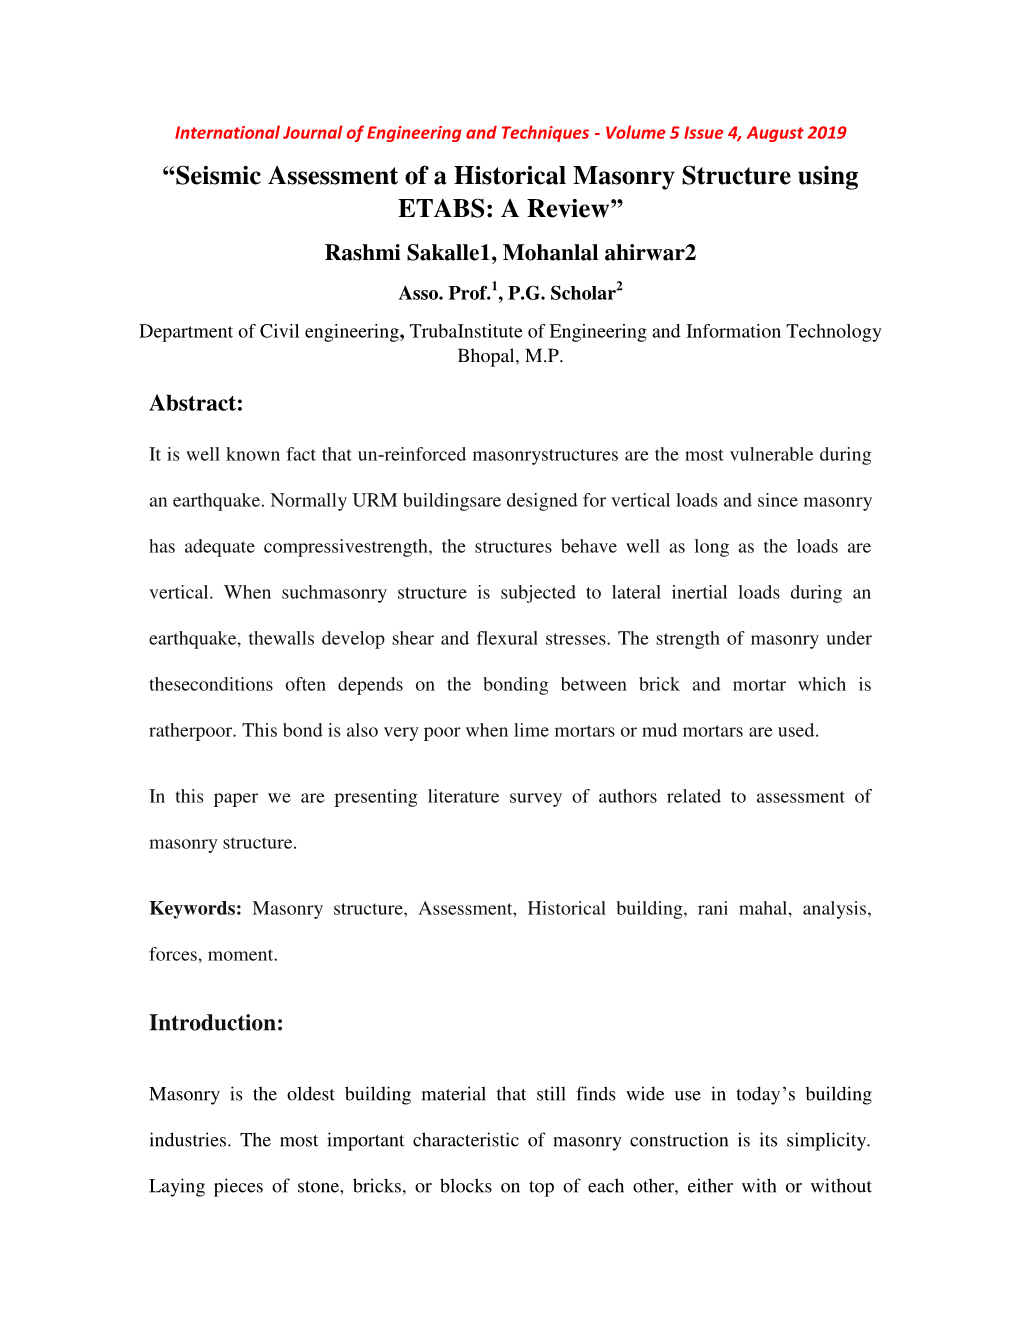 “Seismic Assessment of a Historical Masonry Structure Using ETABS: a Review” Rashmi Sakalle1, Mohanlal Ahirwar2 Asso